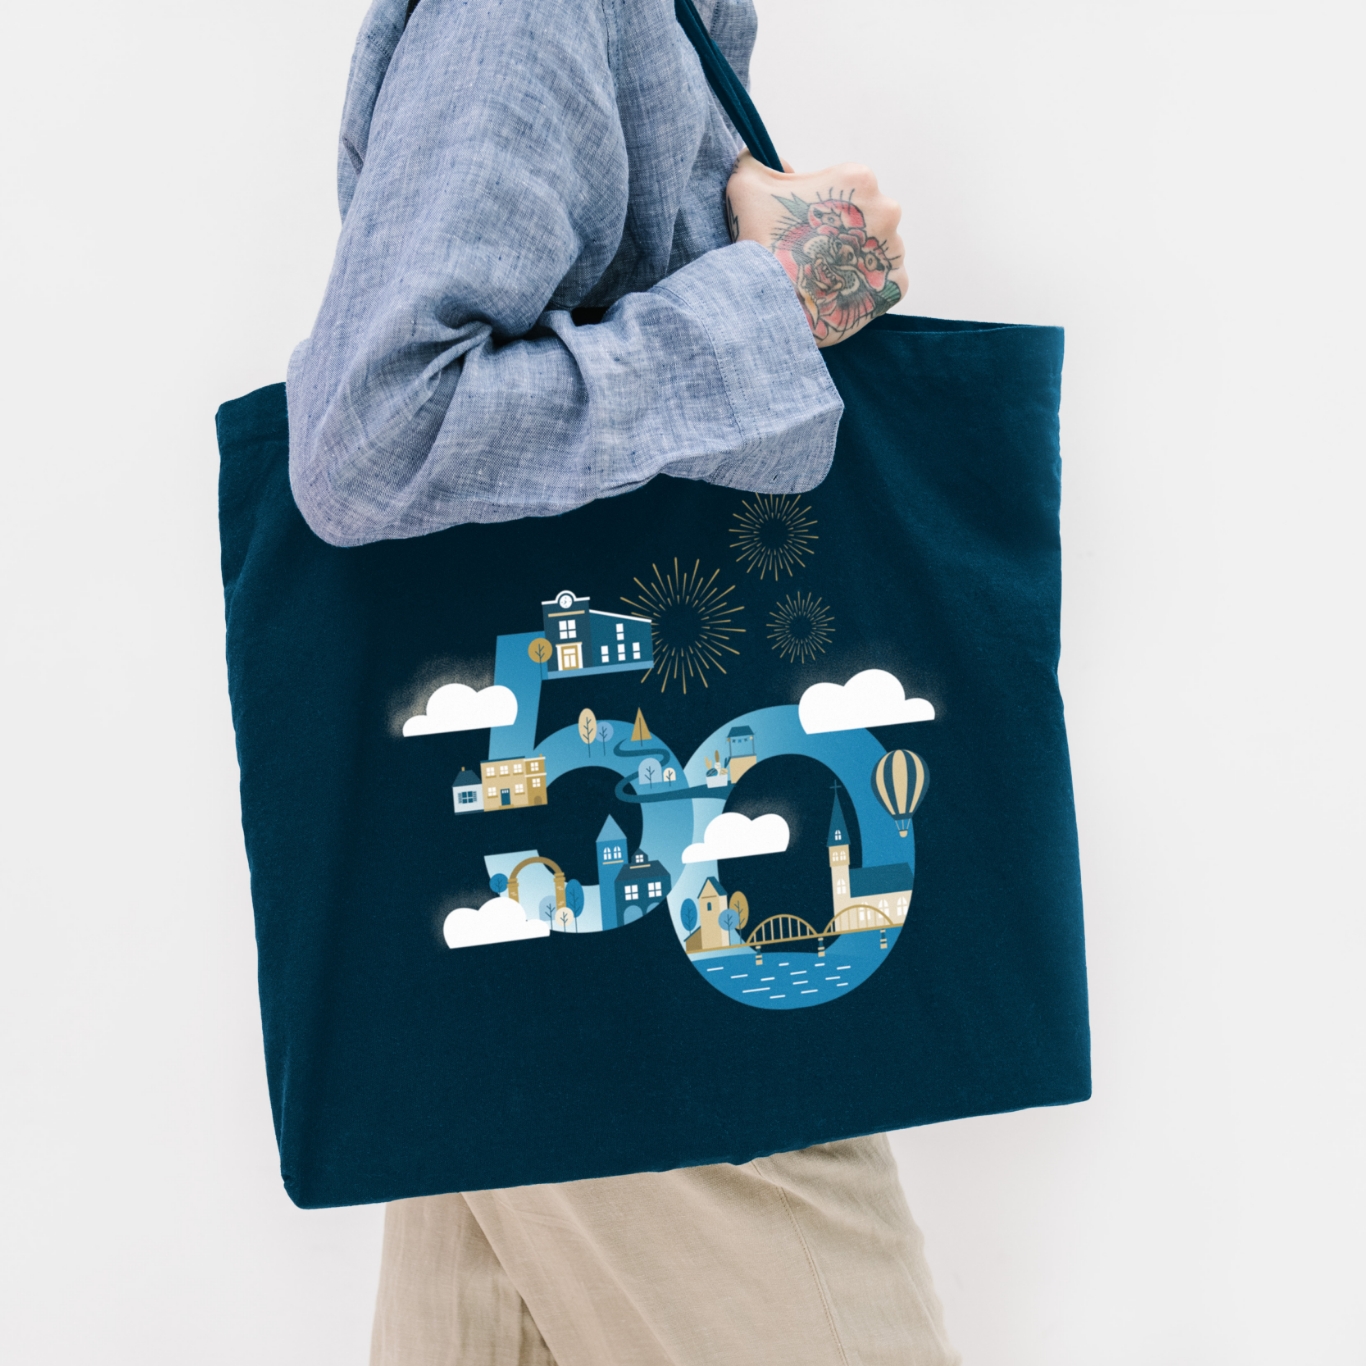 Cambridge 50th anniversary branding on bag